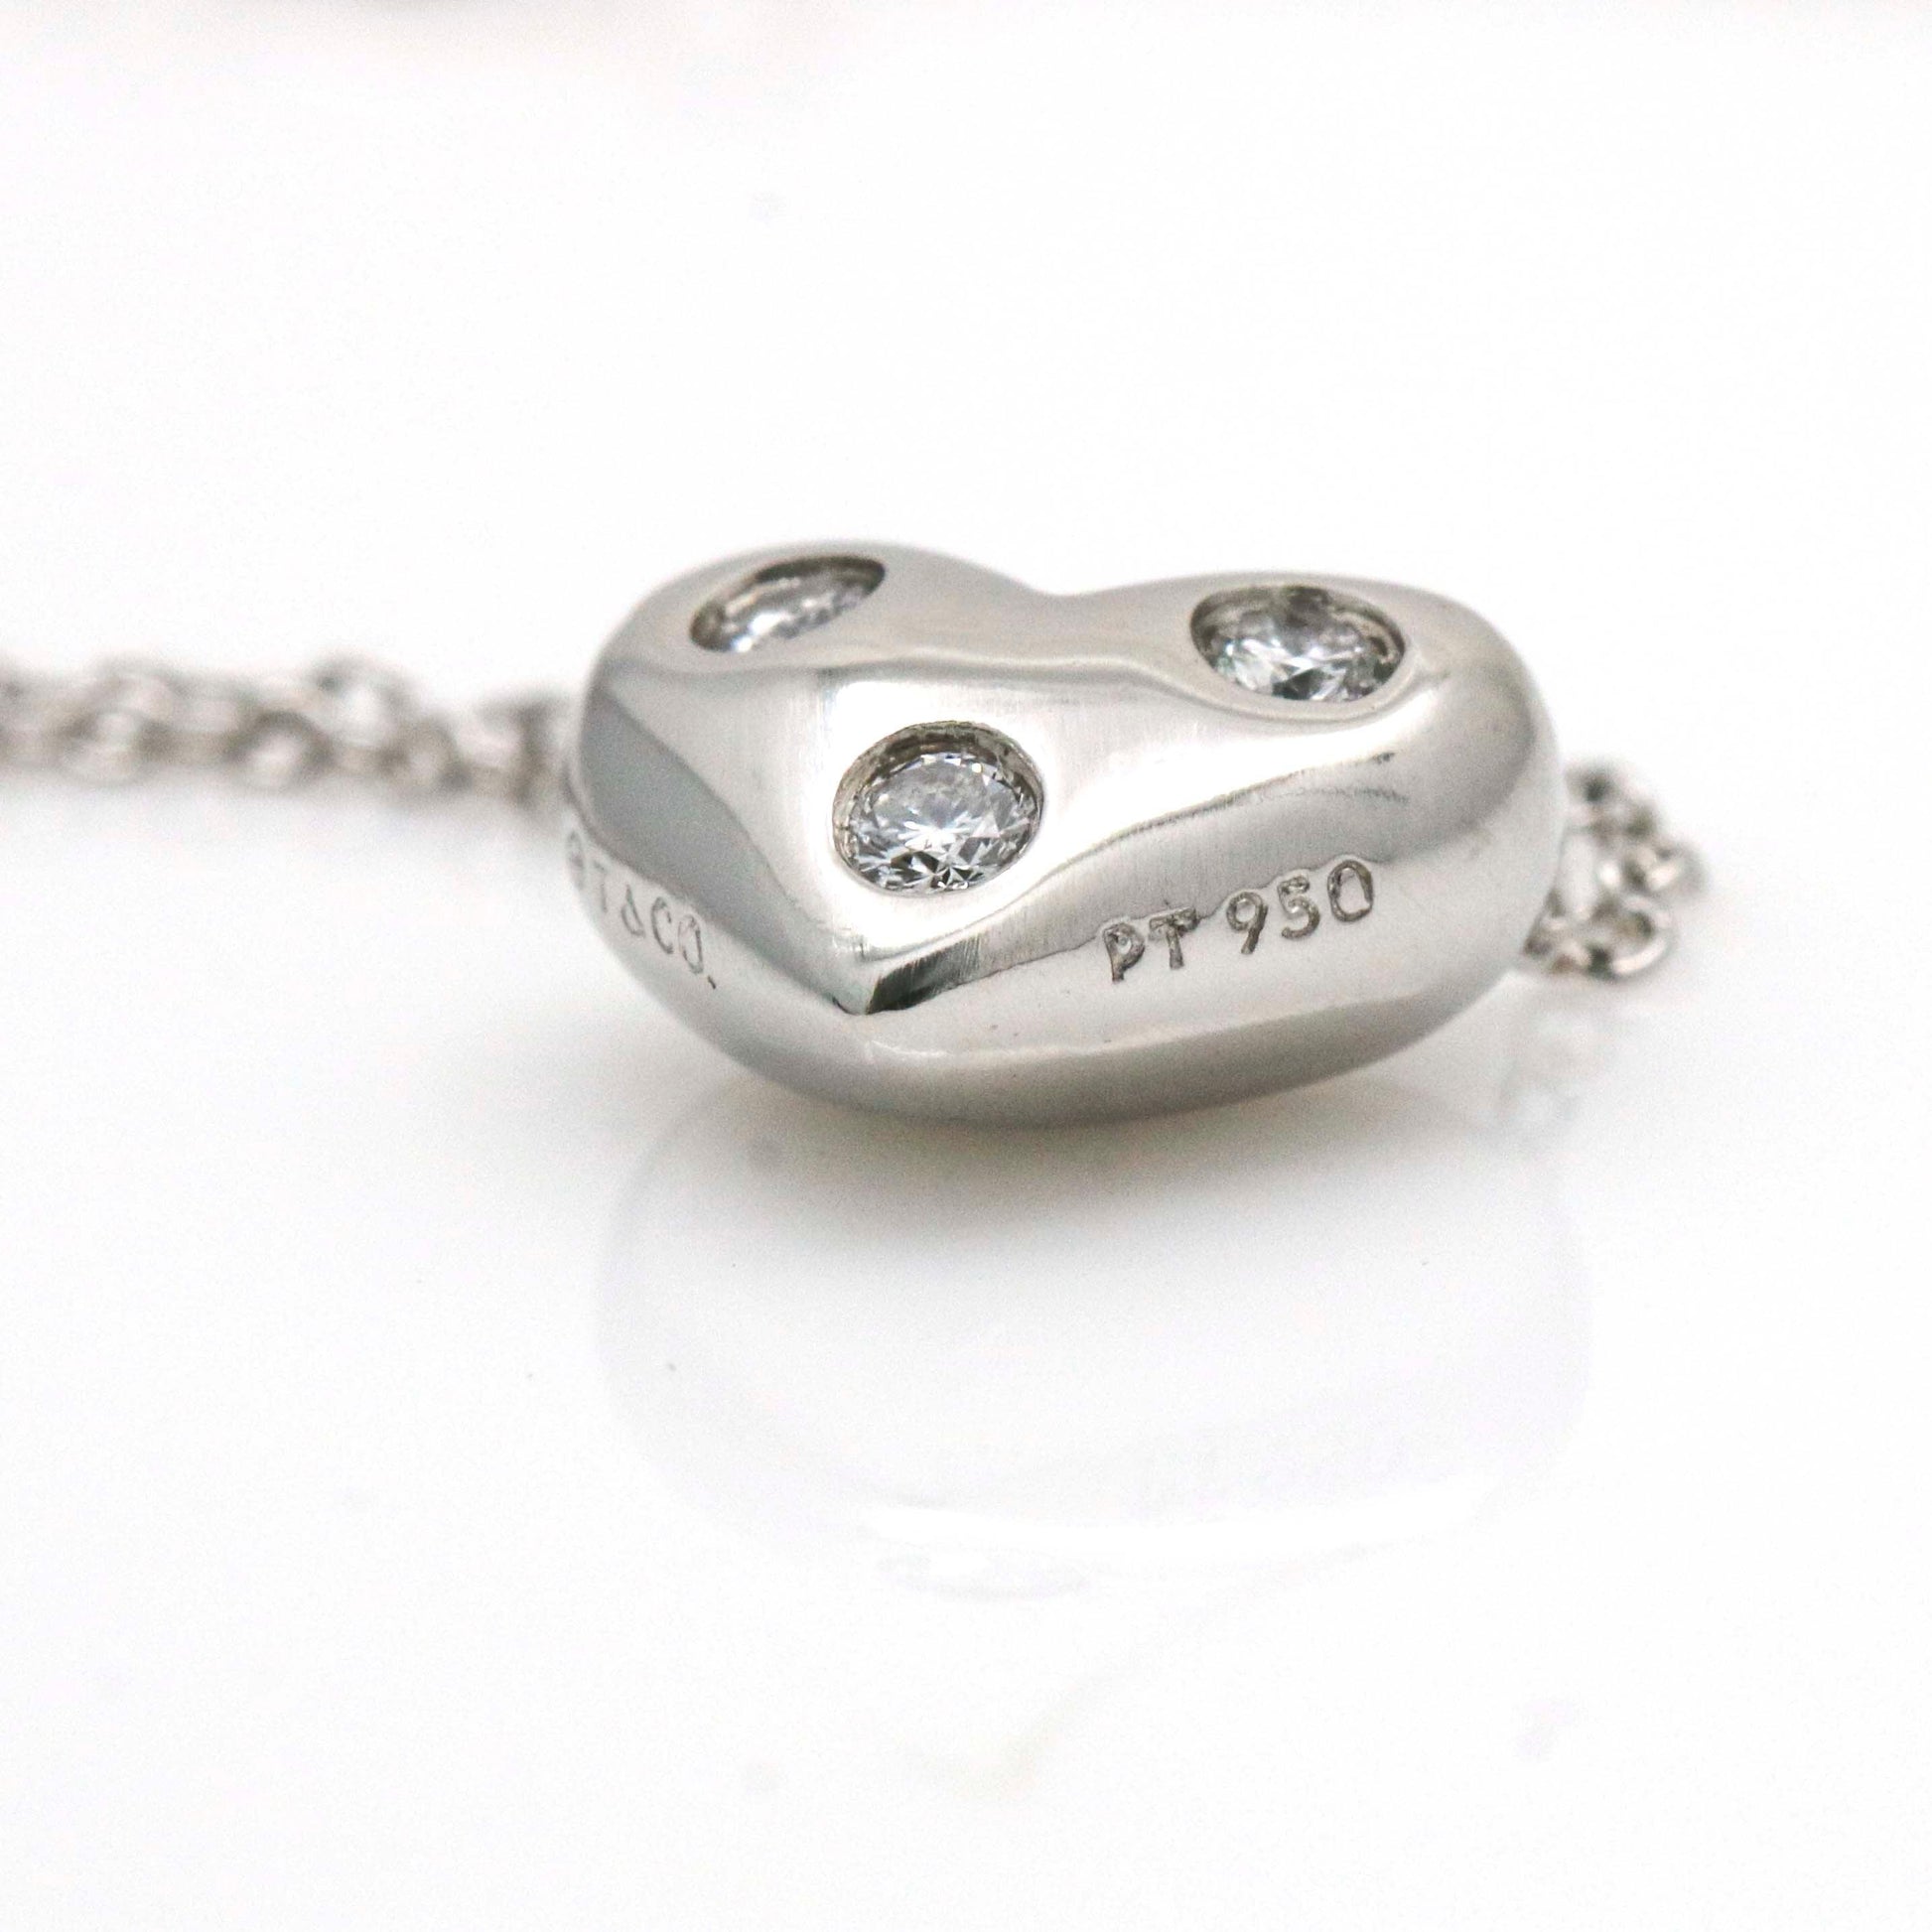 Tiffany & Co. Etoile Diamond Mini Heart Necklace in Platinum - 31 Jewels Inc.